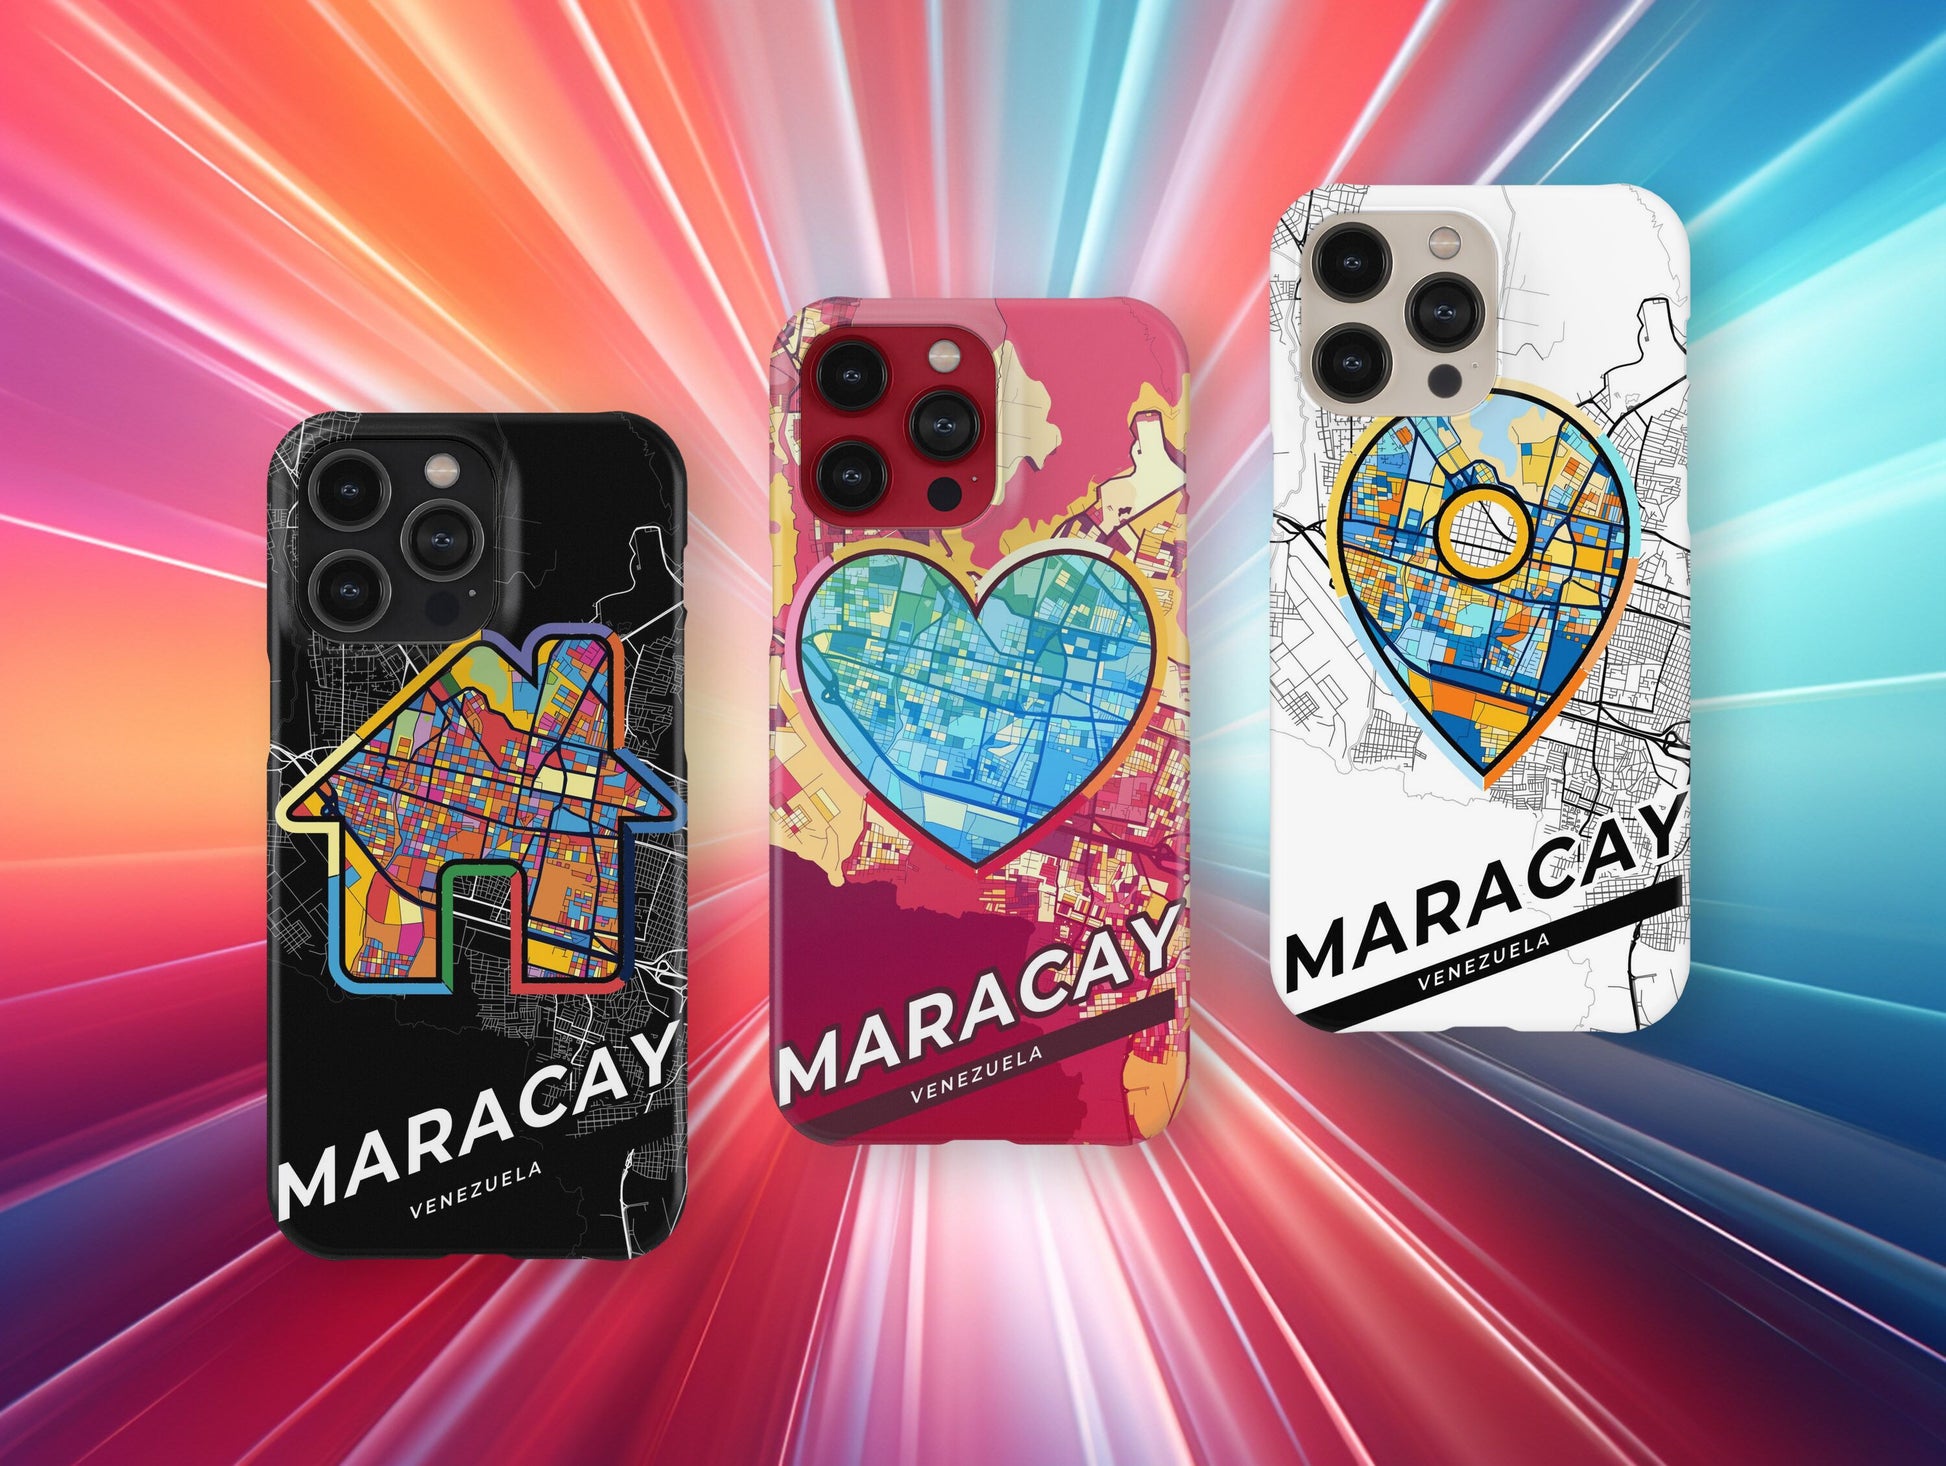 Maracay Venezuela slim phone case with colorful icon. Birthday, wedding or housewarming gift. Couple match cases.